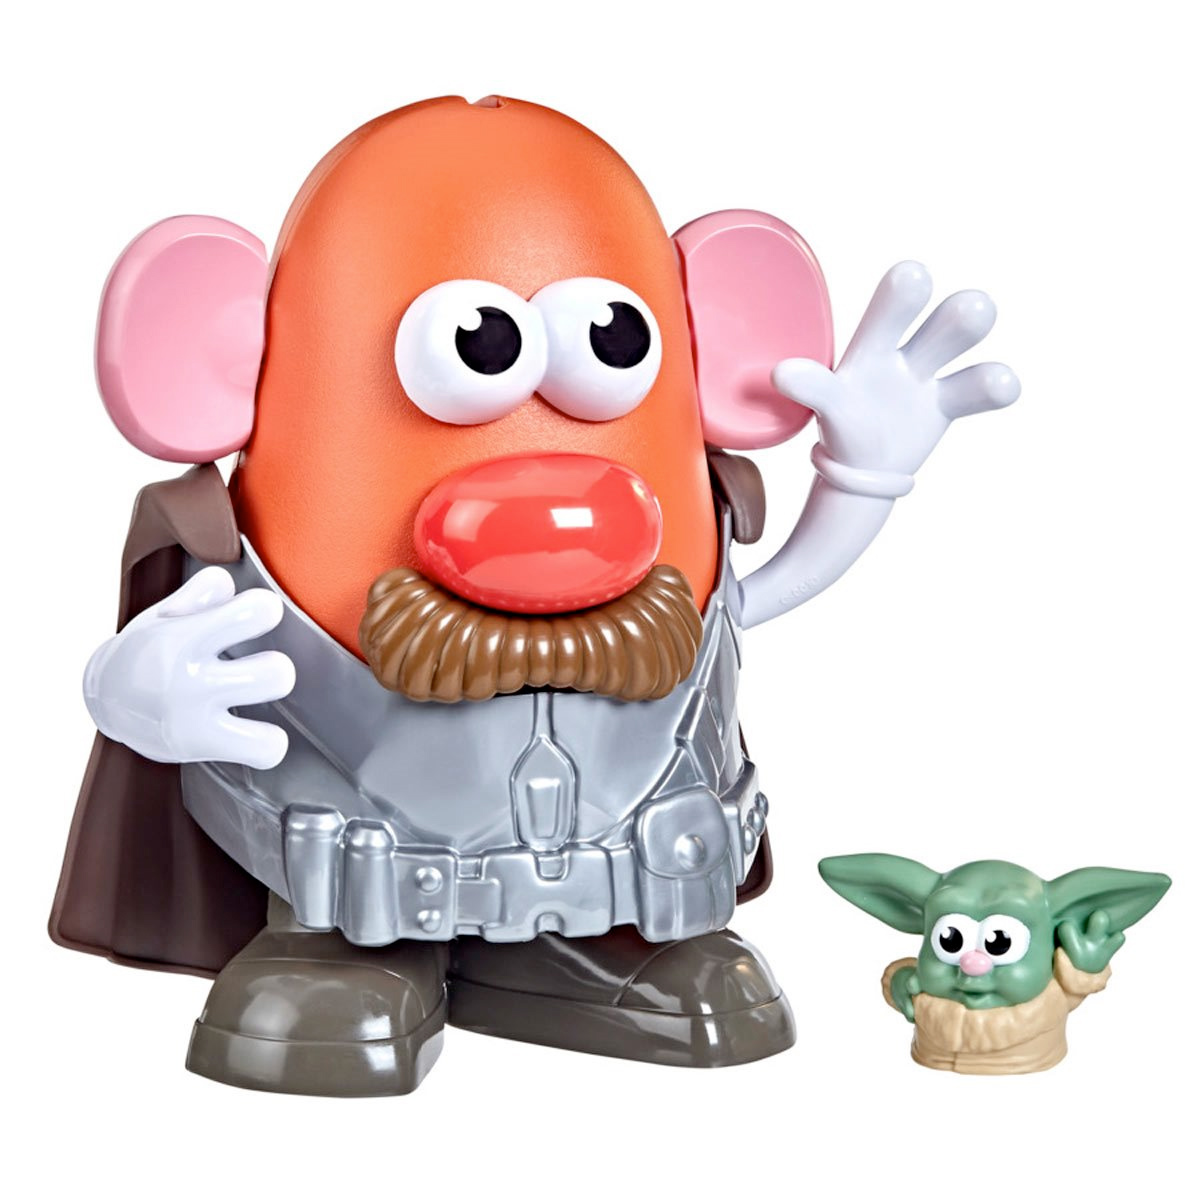 The Yamdalorian and the Tot Star Wars Potato Head